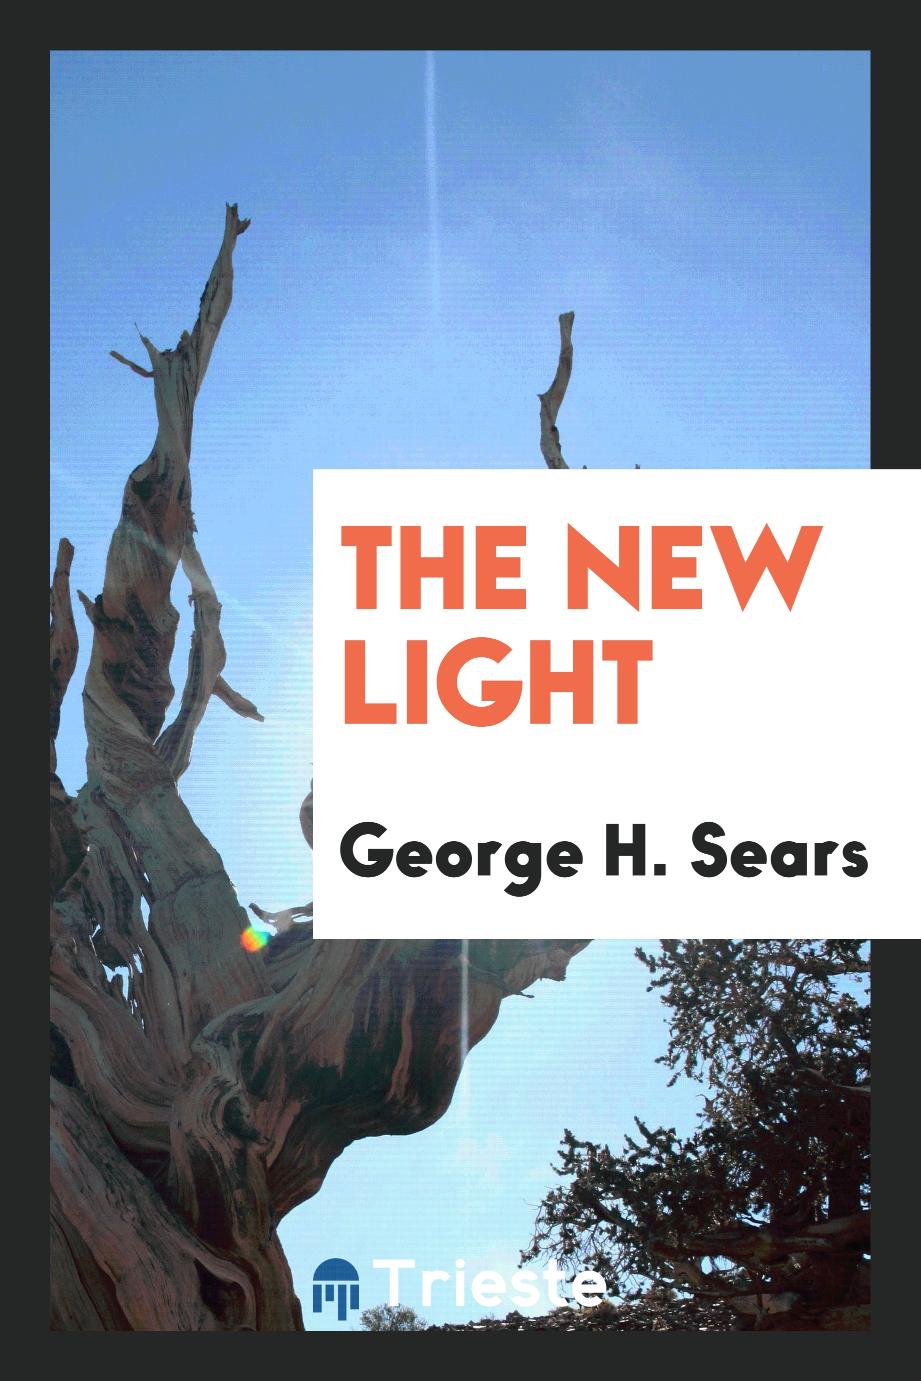 The new light